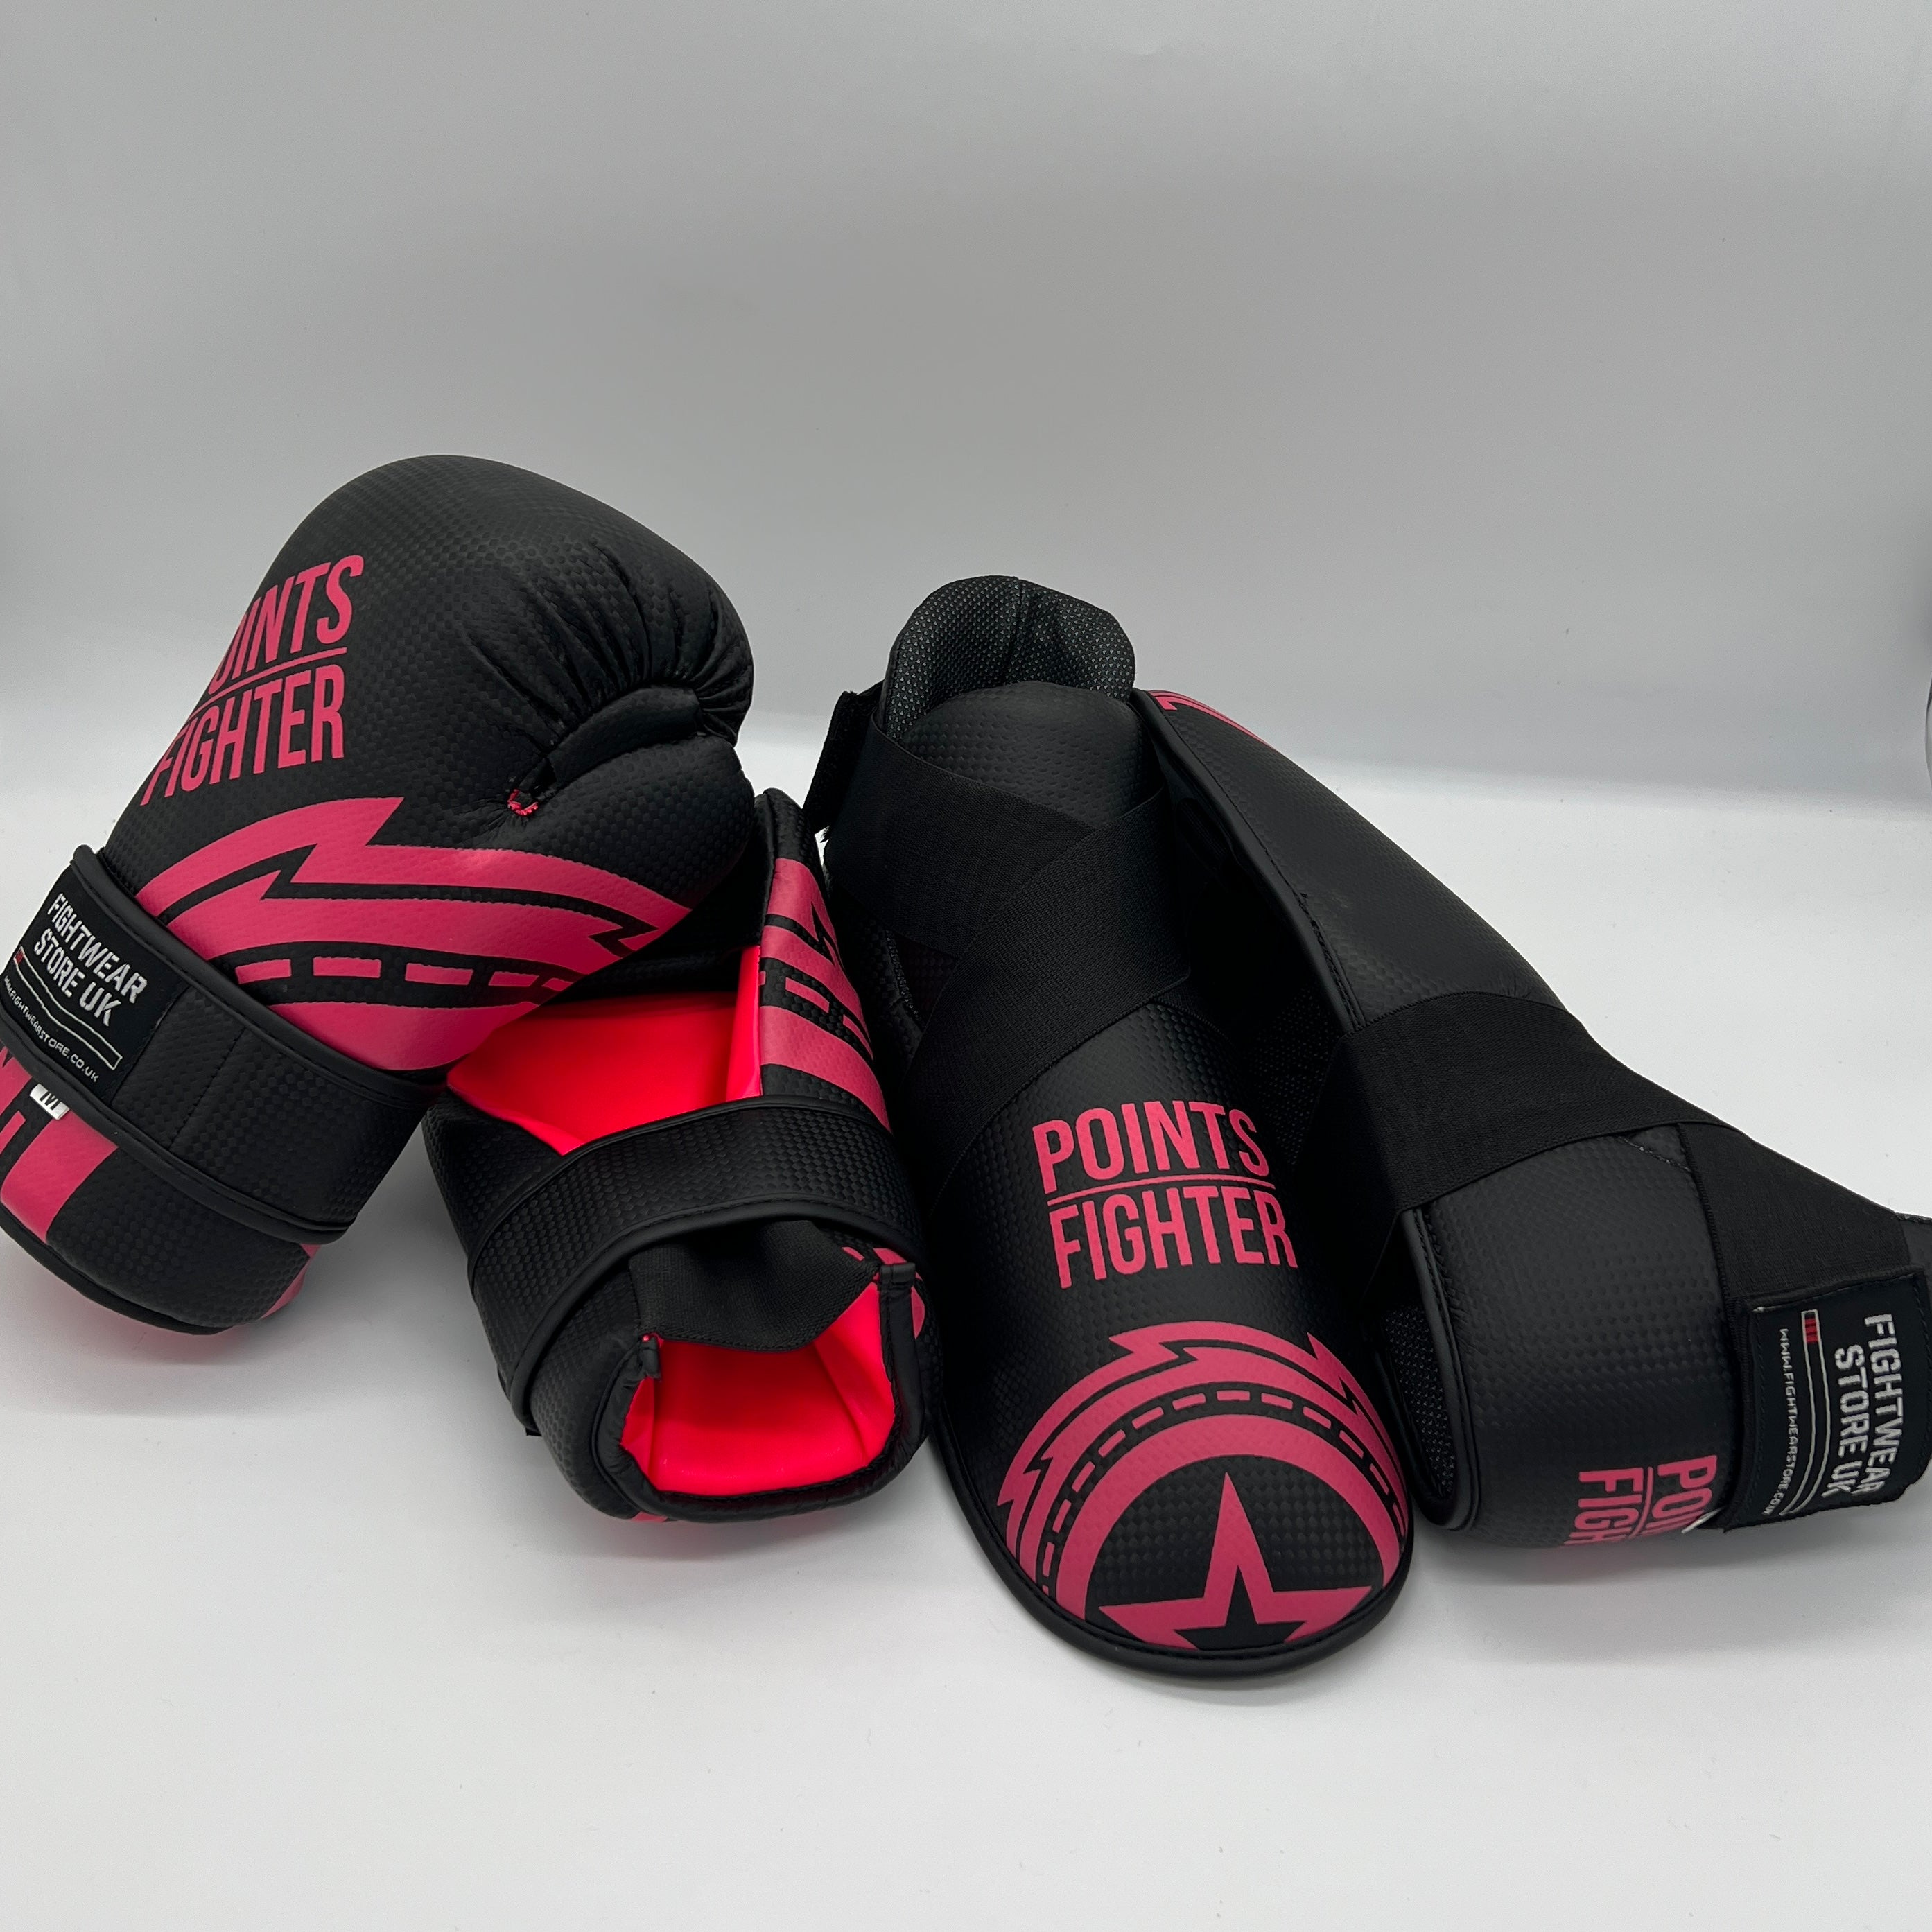 PRO-X Kick Boots - Carbon Black/Pink